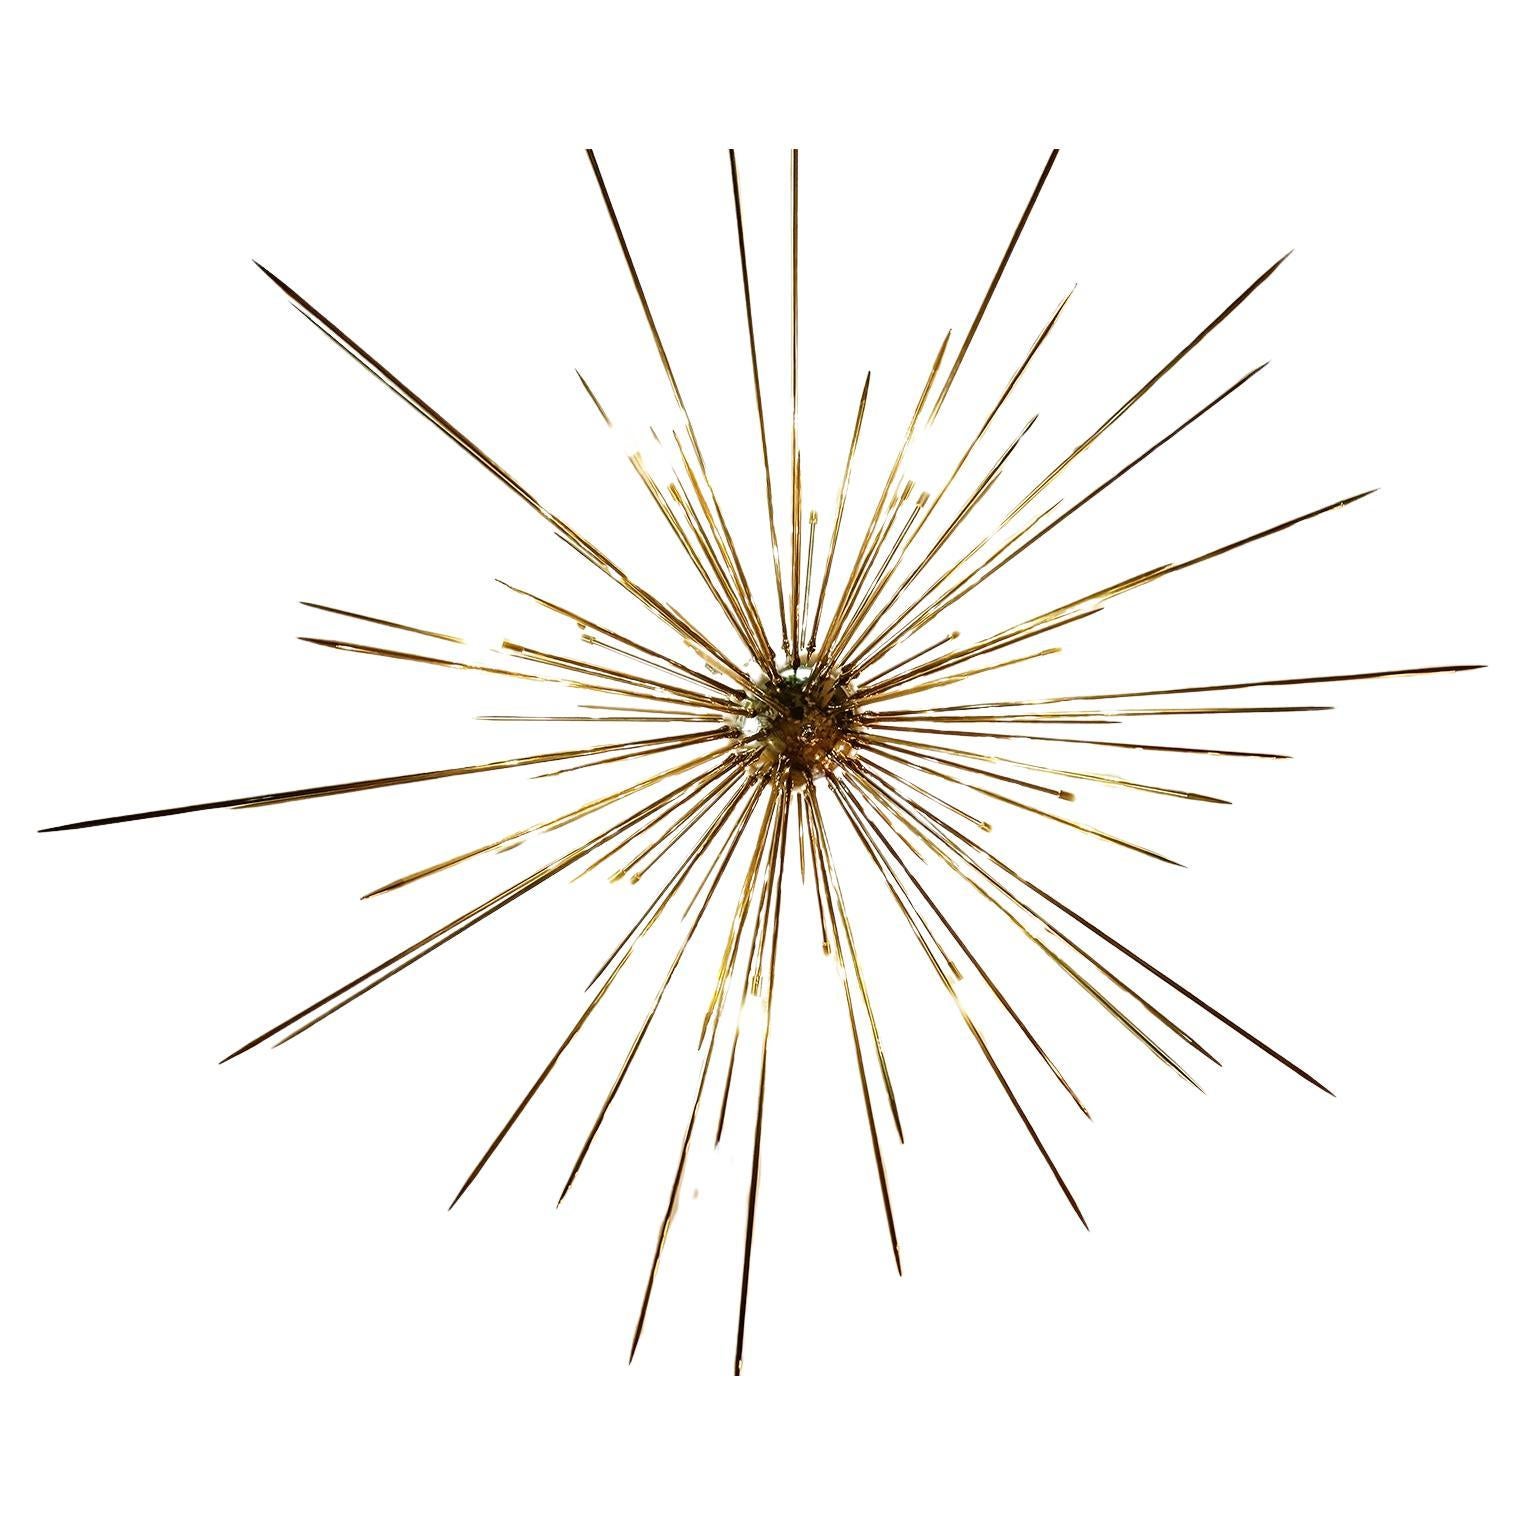 Rays of Light - impressive solid brass chandelier, Sputnik style.
Finish - high gloss polished 

Diamater: 125 cm (50